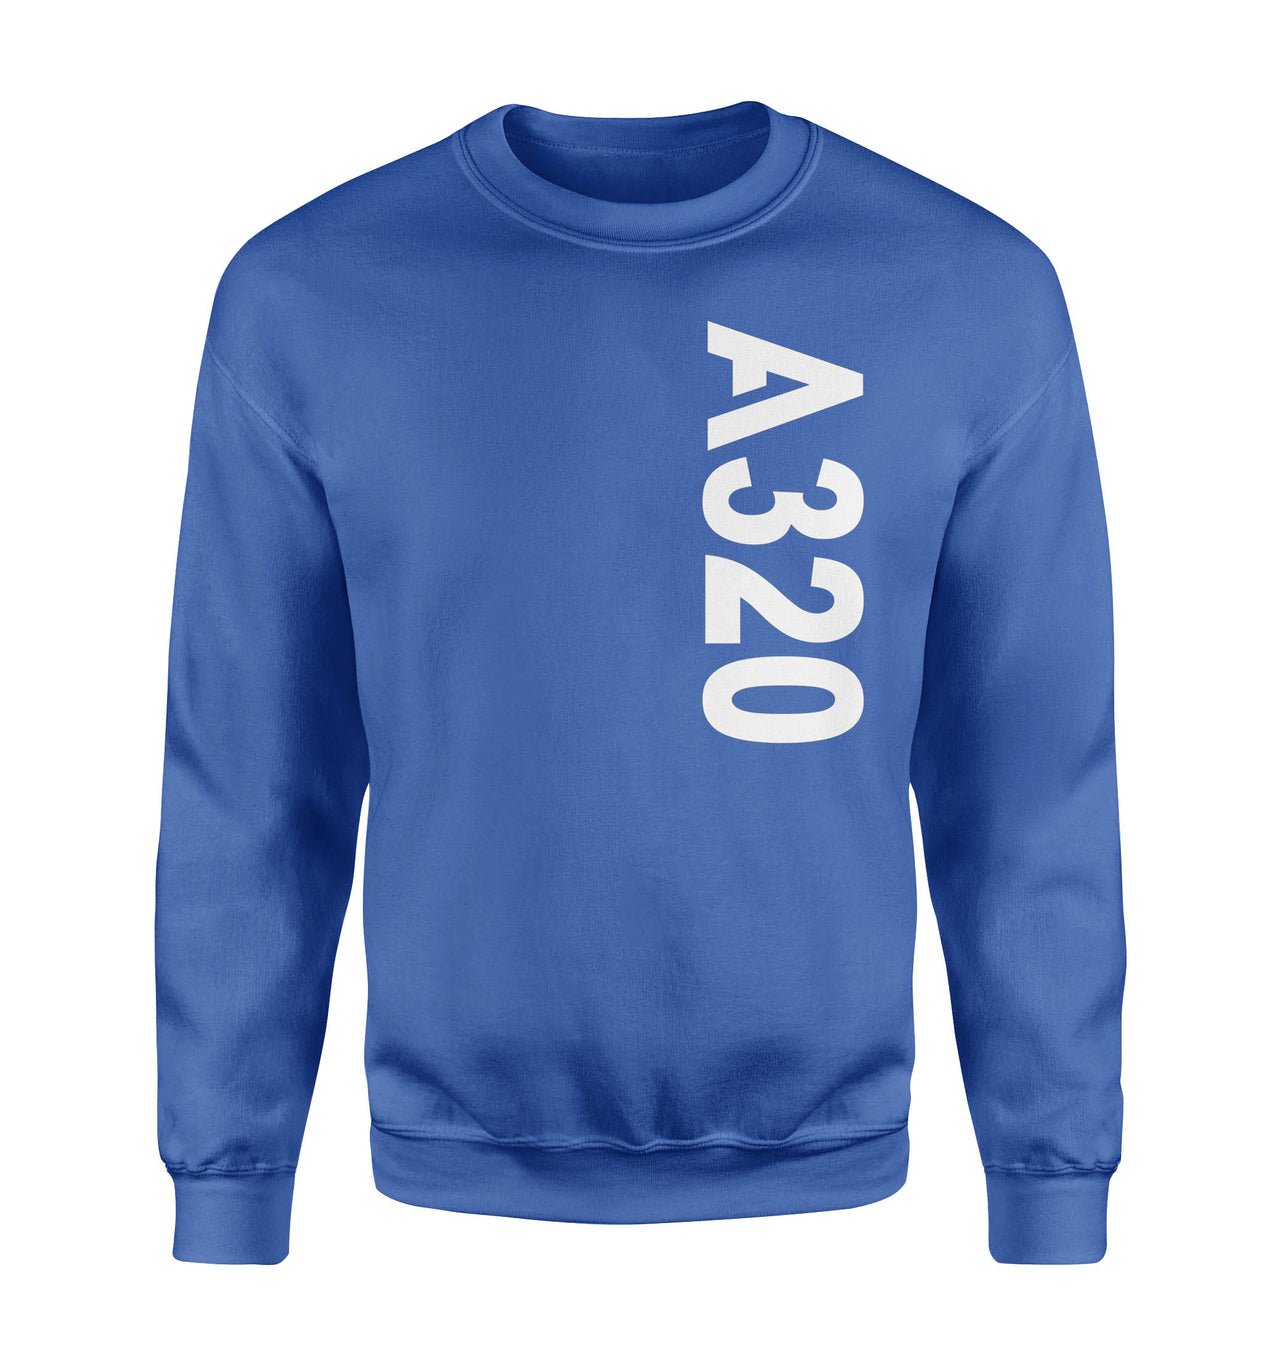 Side Text A319 Designed Sweatshirts